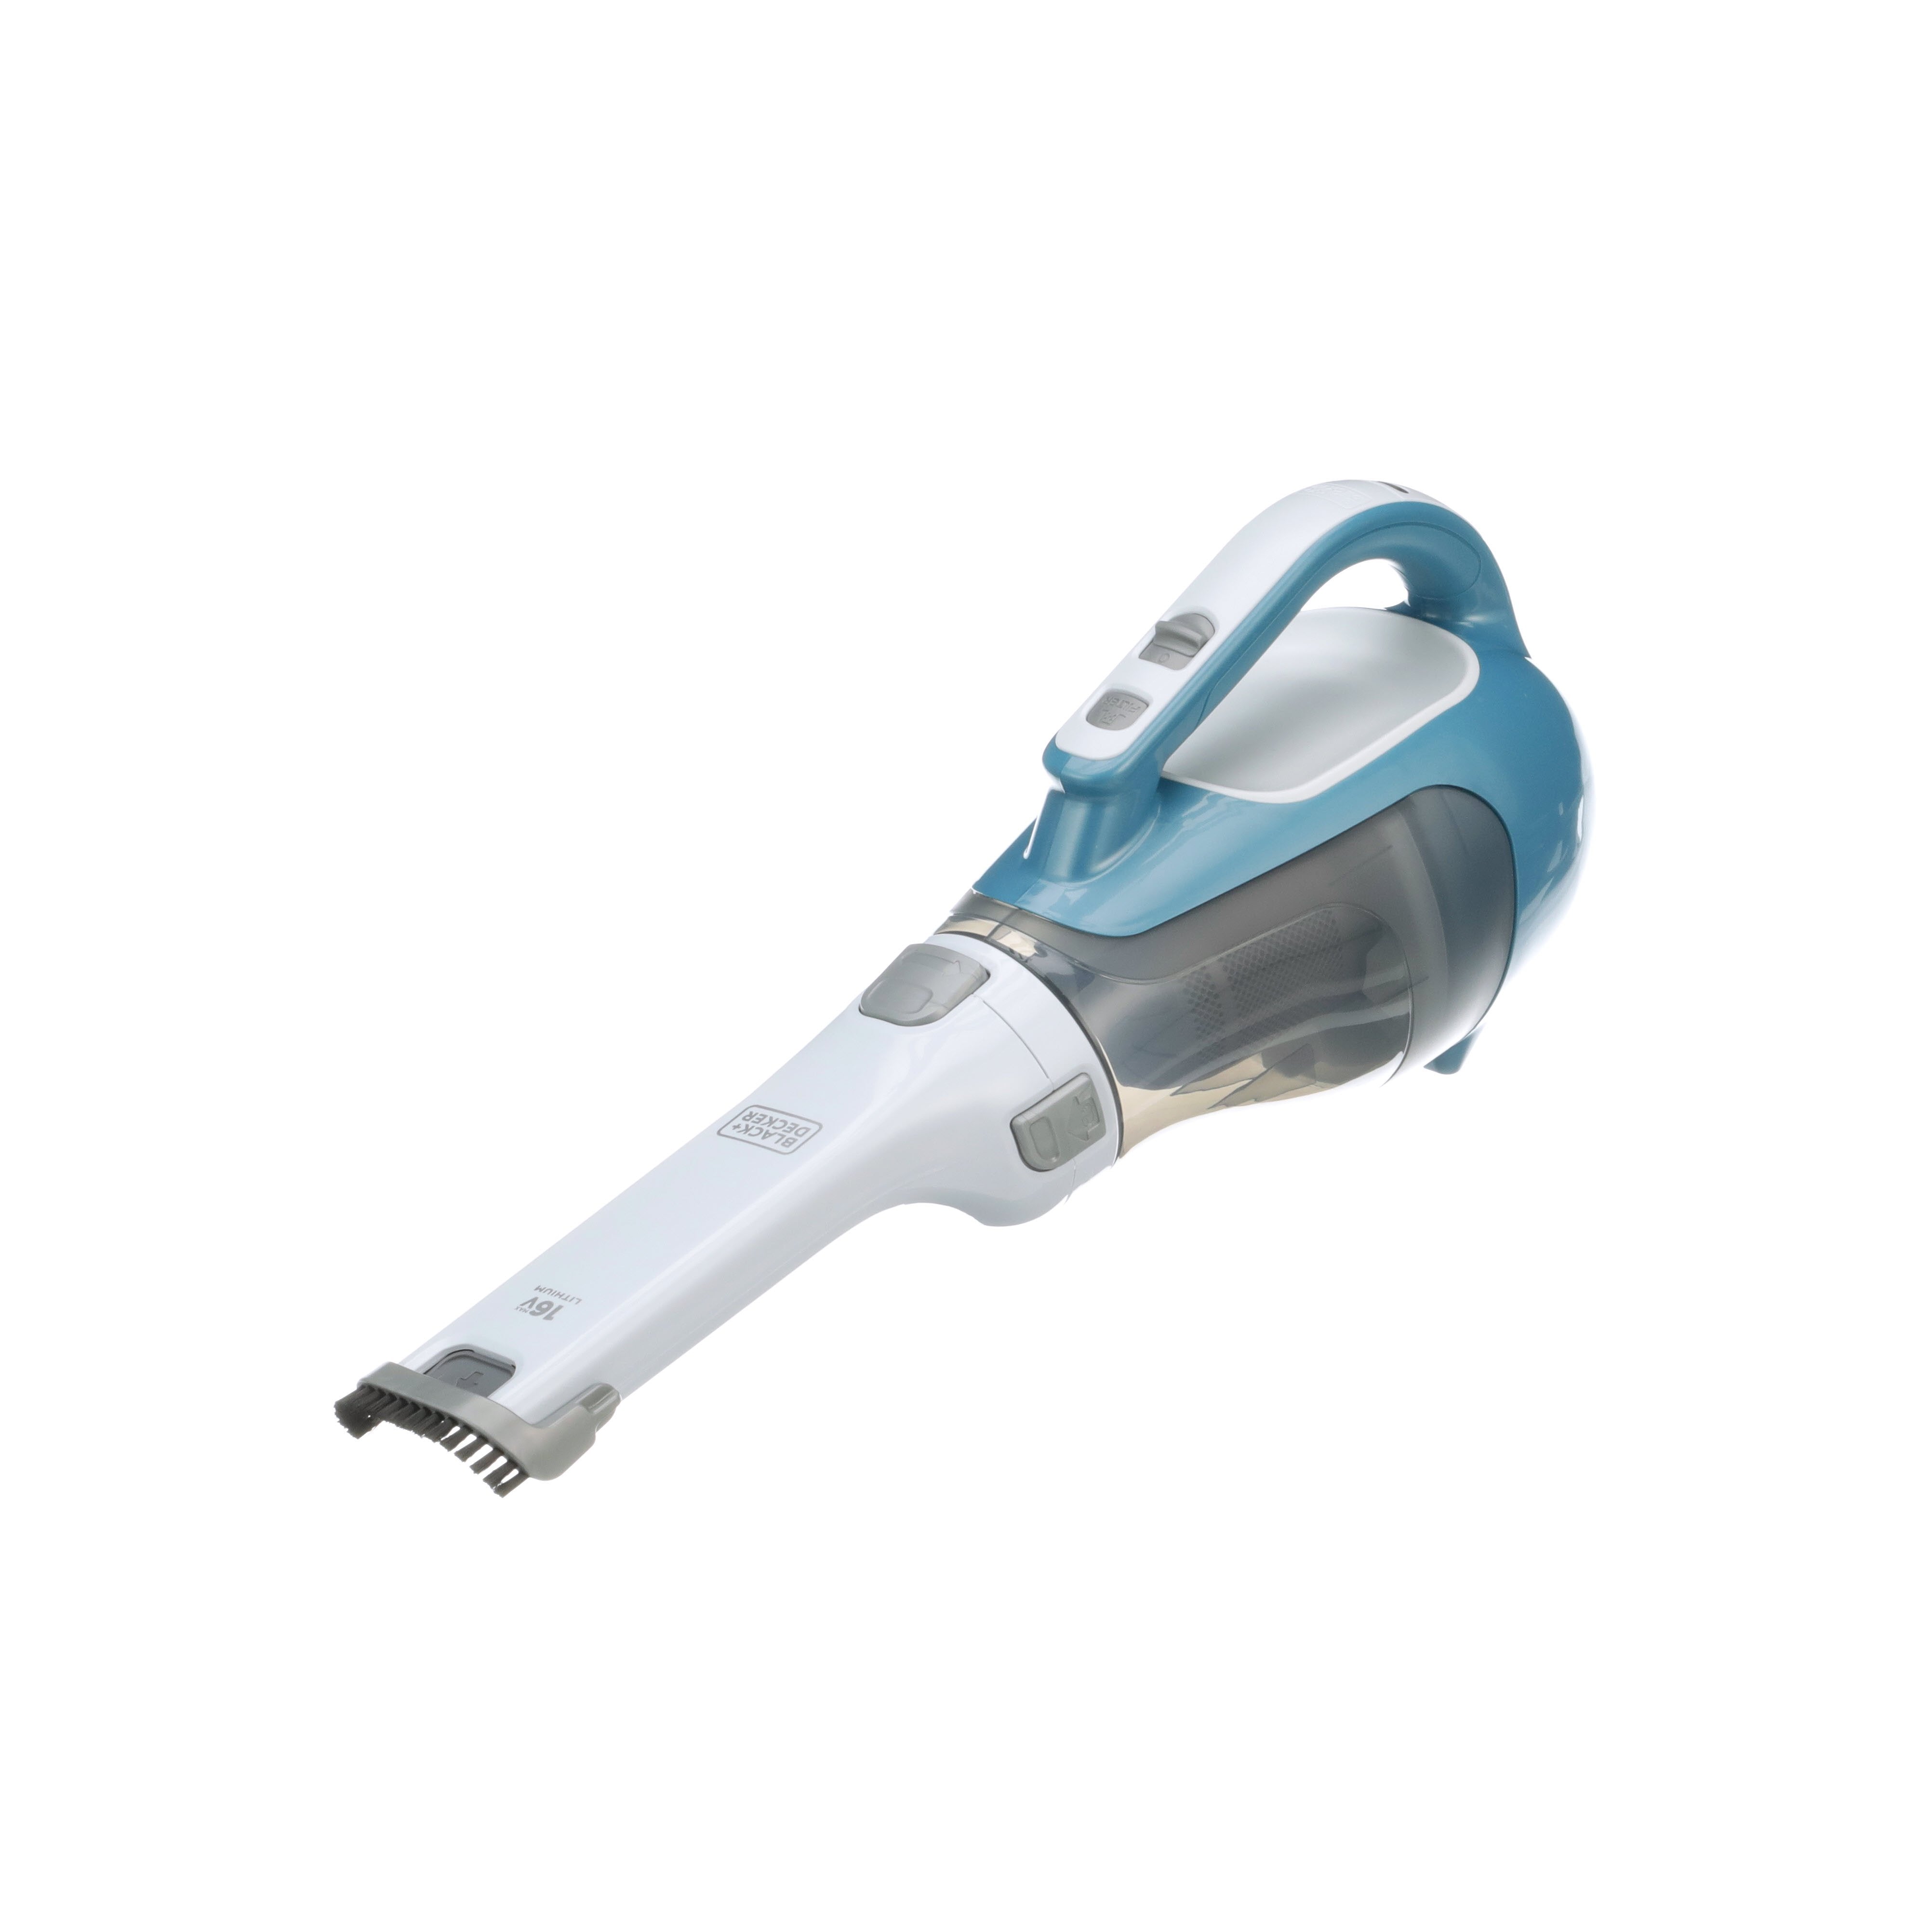 BLACK+DECKER CHV1410L Handheld Vacuum with Pivoting Nozzle - Blue